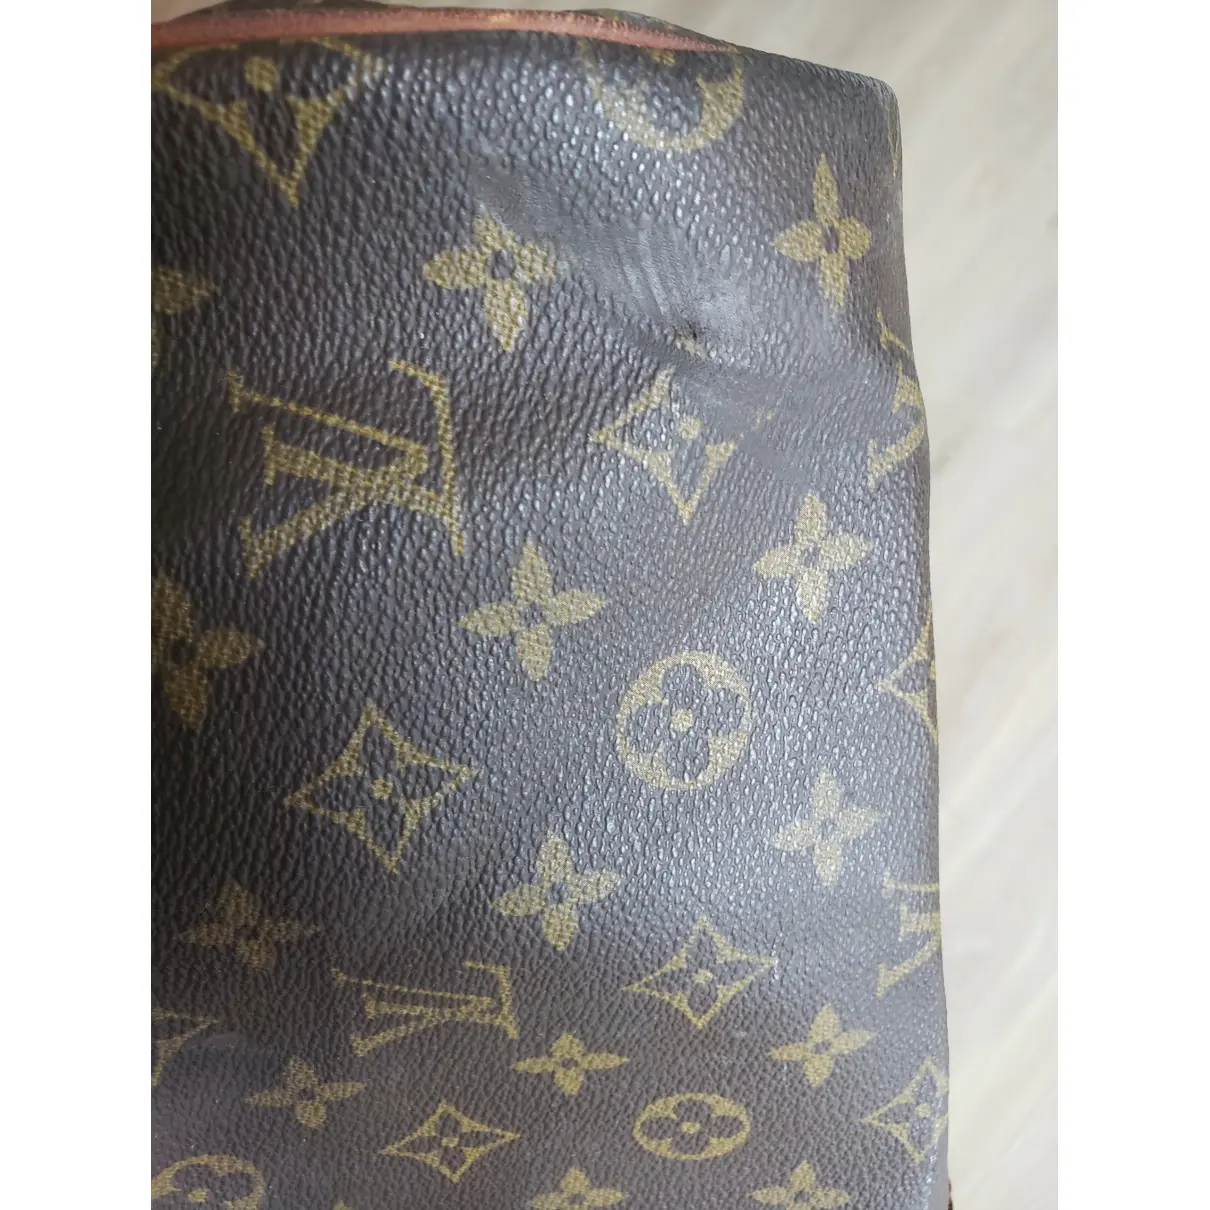 Keepall cloth travel bag Louis Vuitton - Vintage